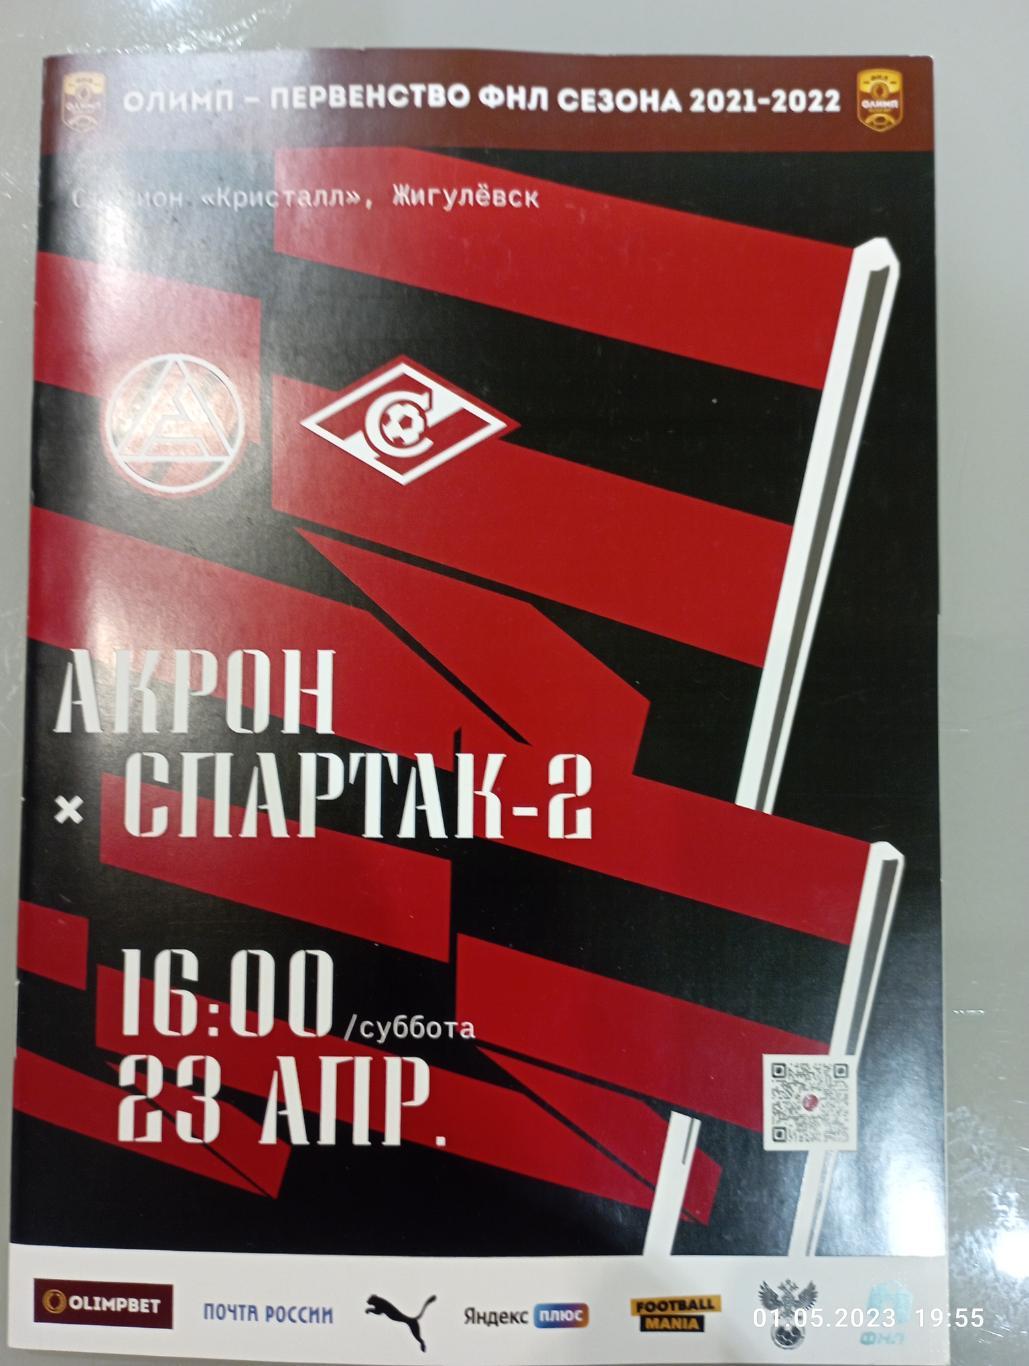 Акрон Тольятти - Спартак 2 Москва. 23.04.2022 . Программа.